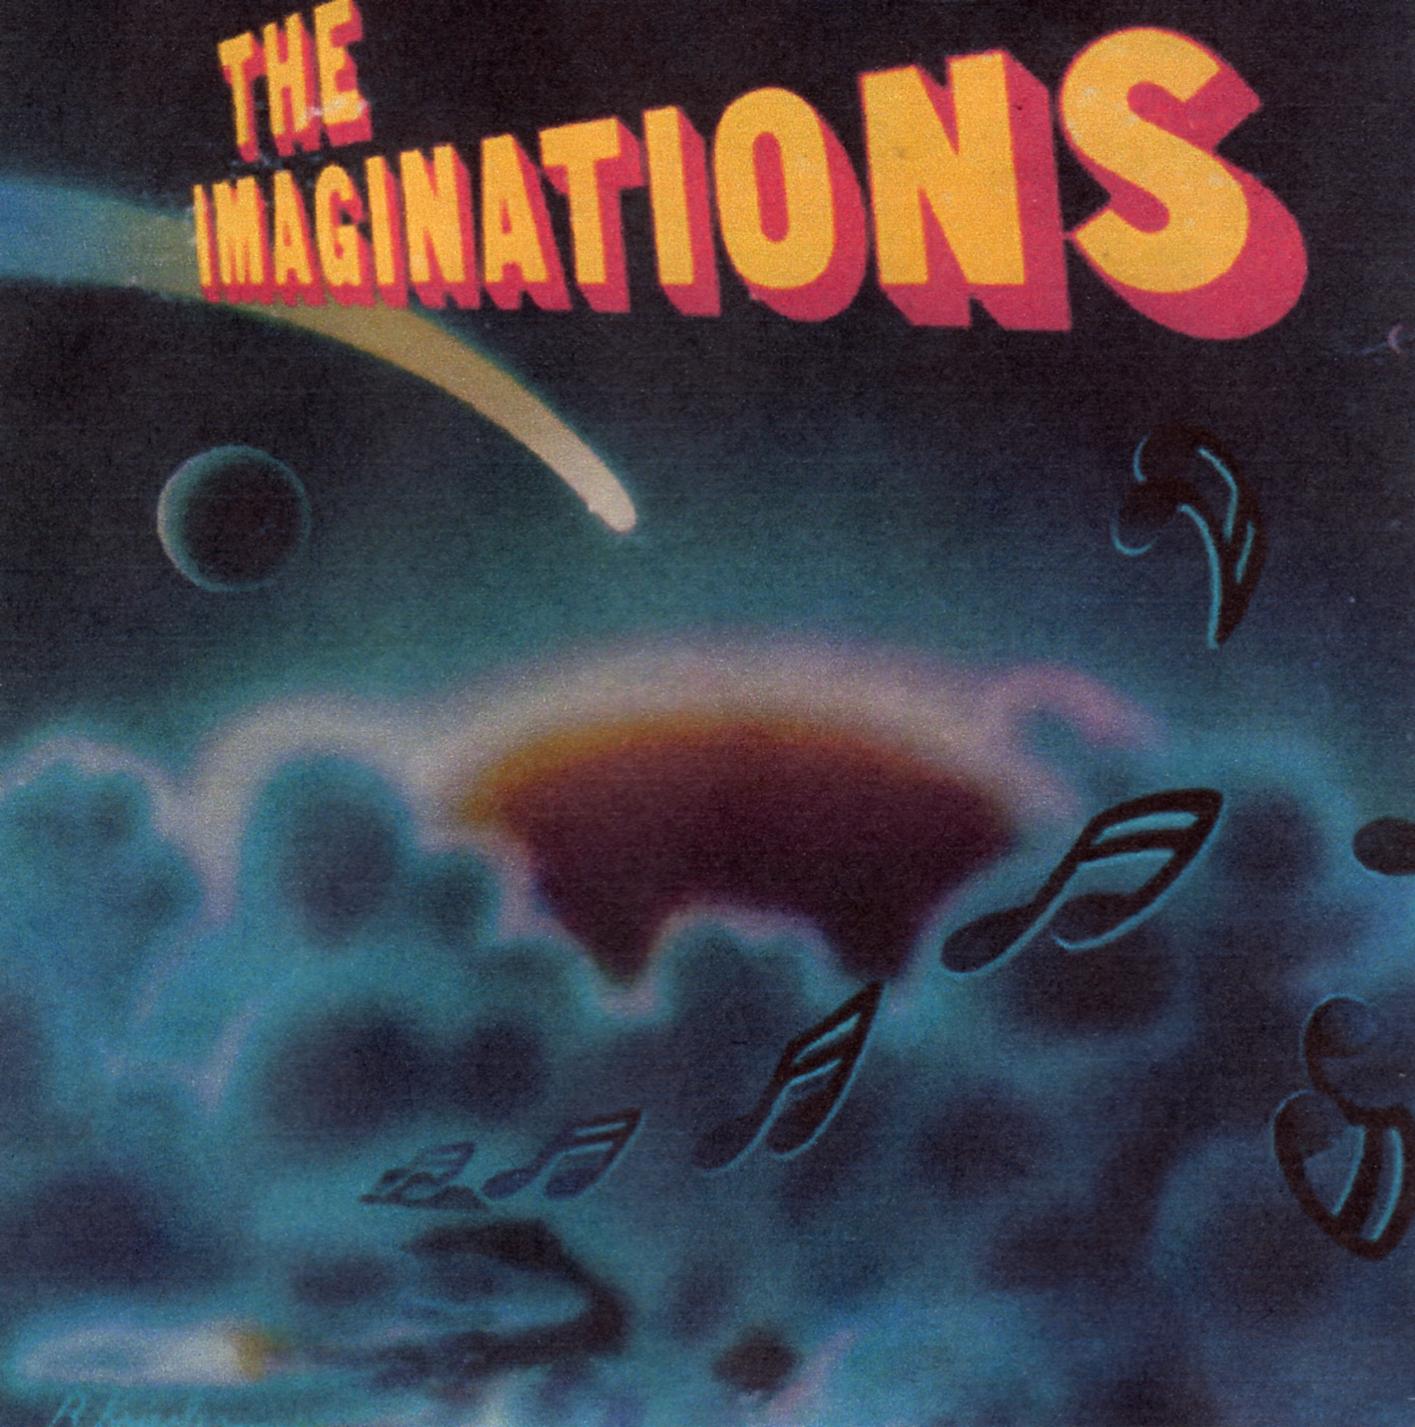 The last imagination